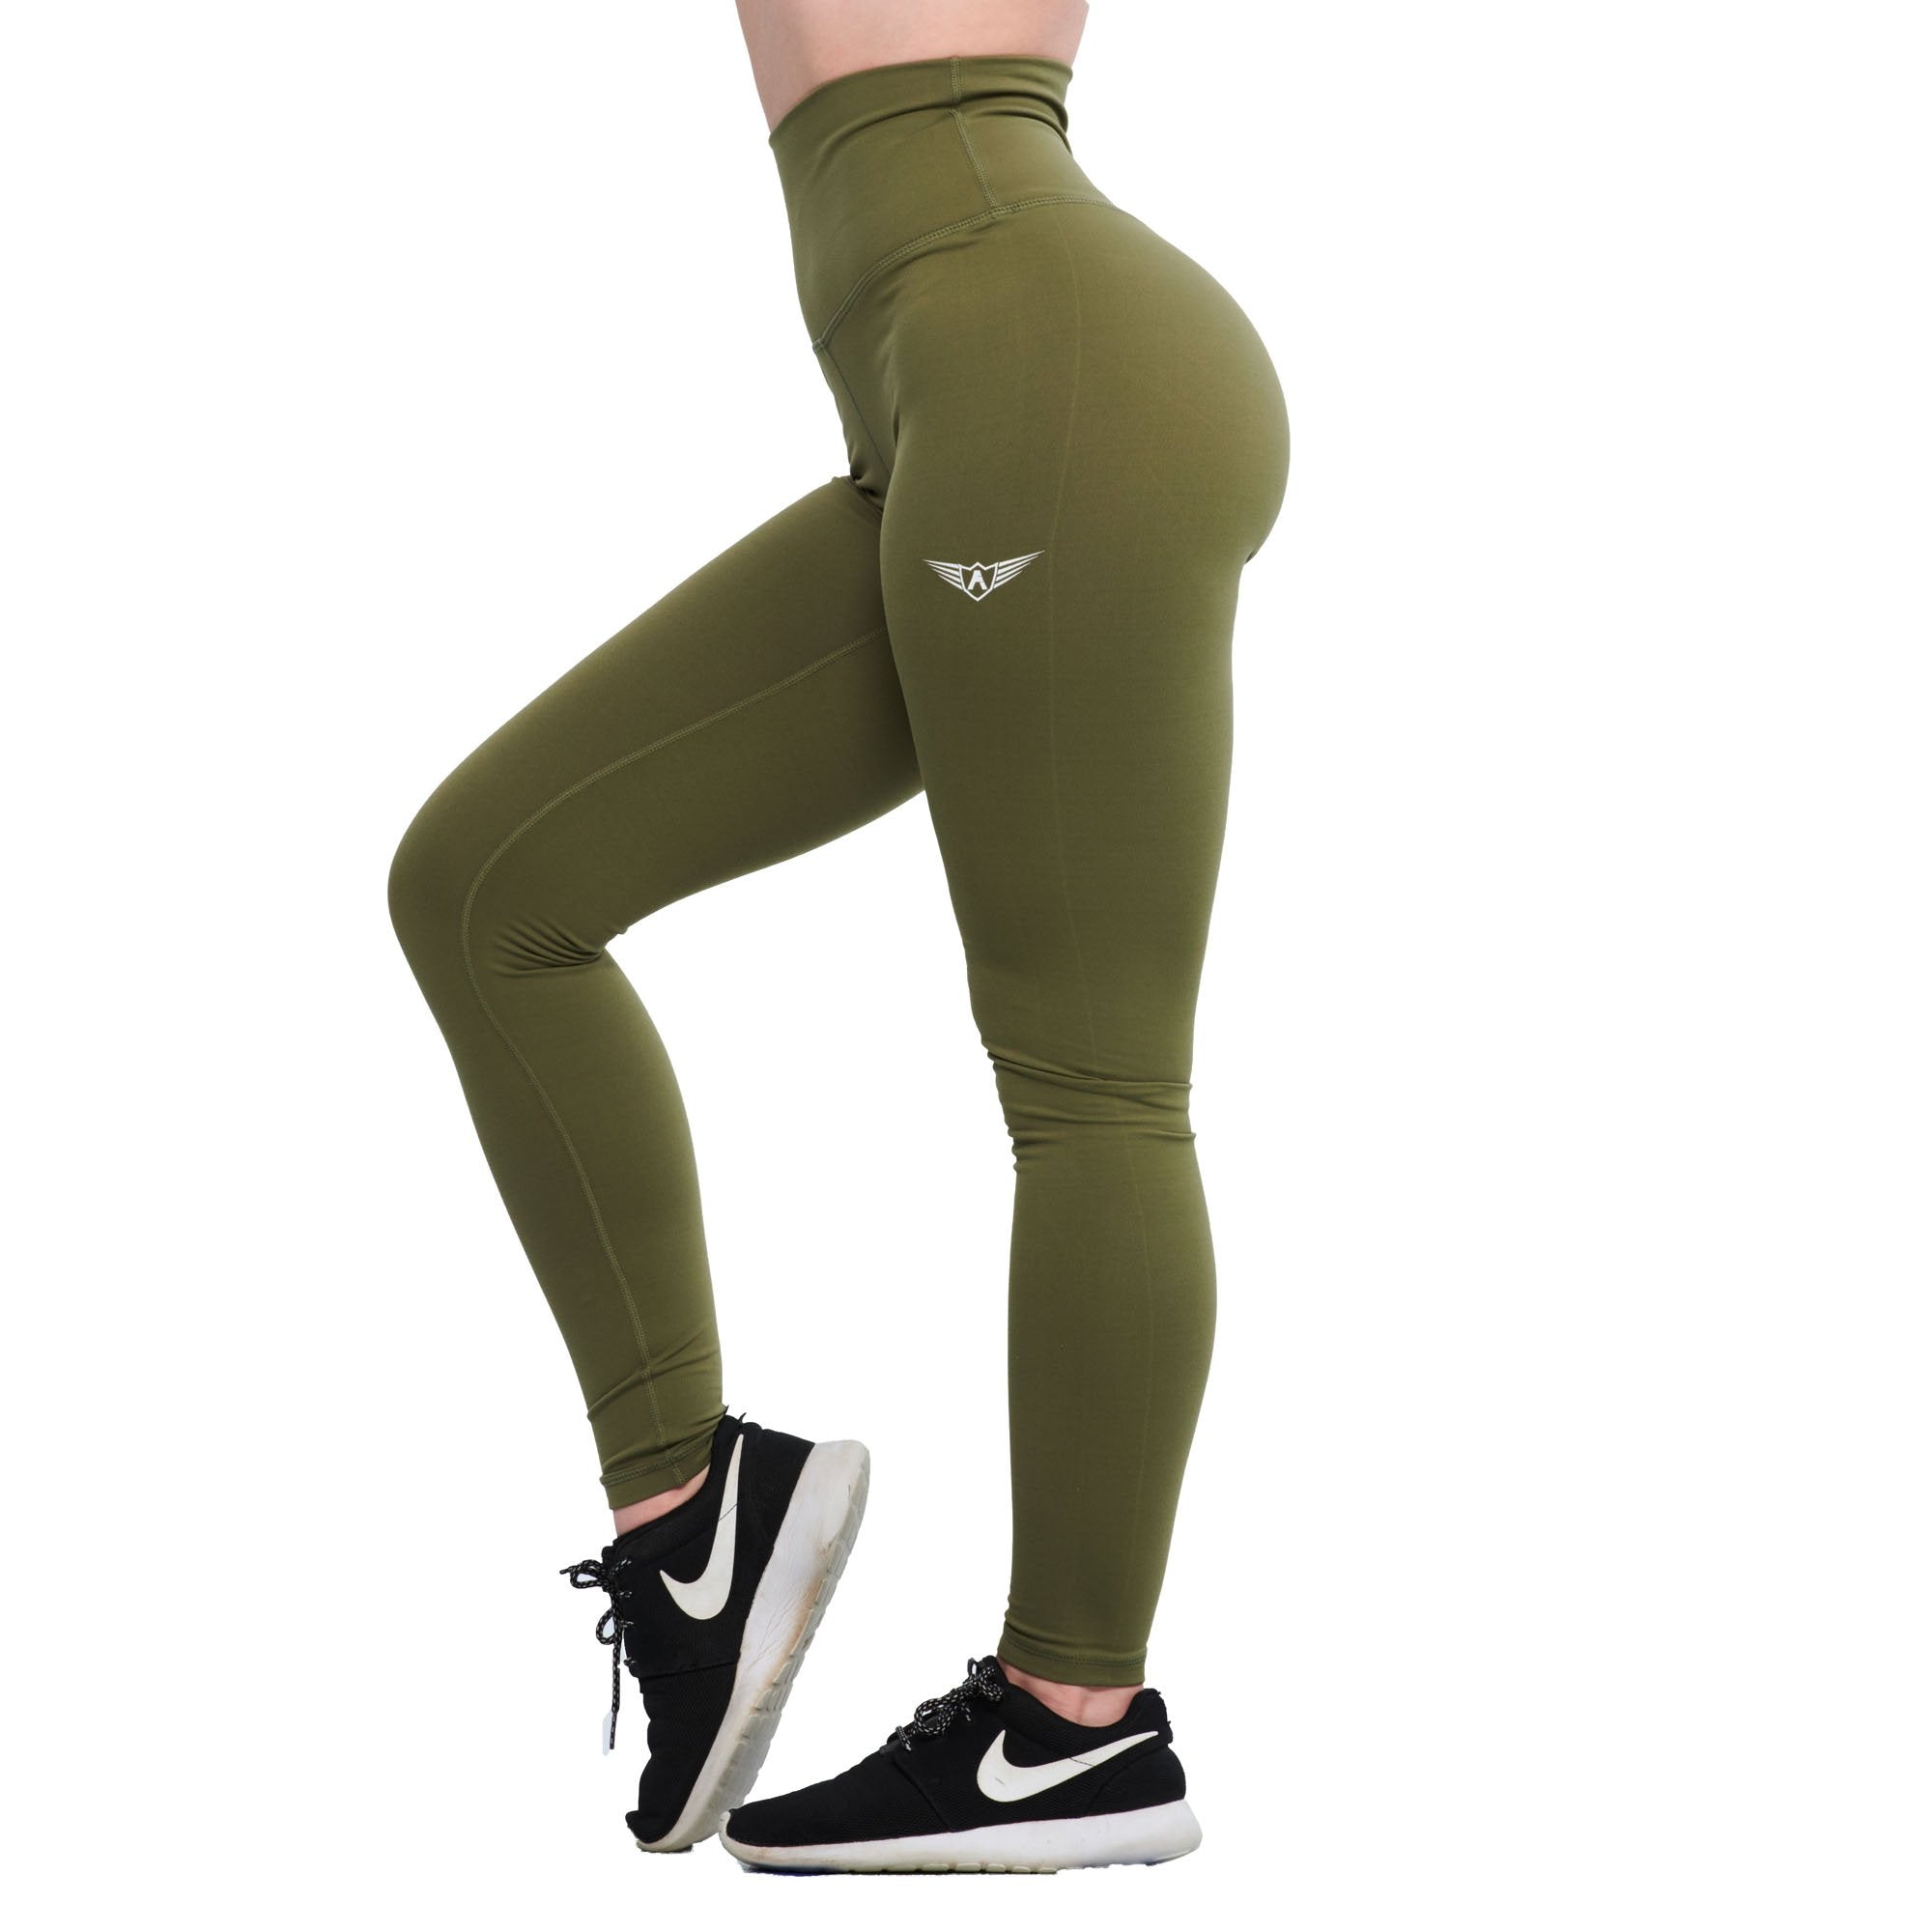 Nike dri fit flash running leggings olive green polka dot sz XS | eBay